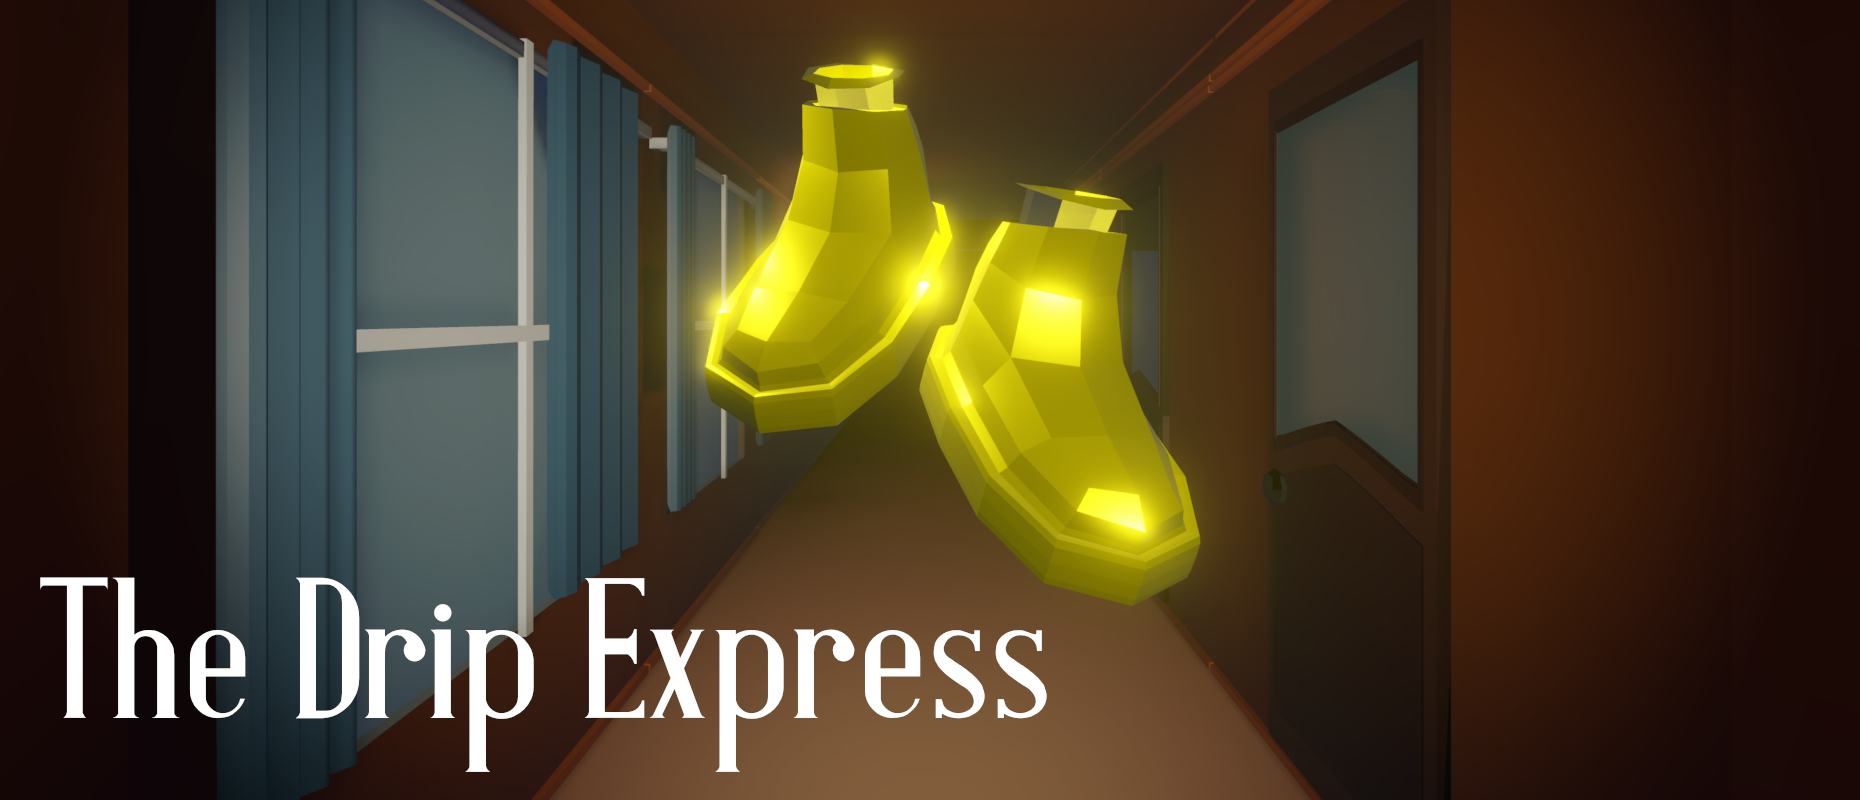 The Drip Express